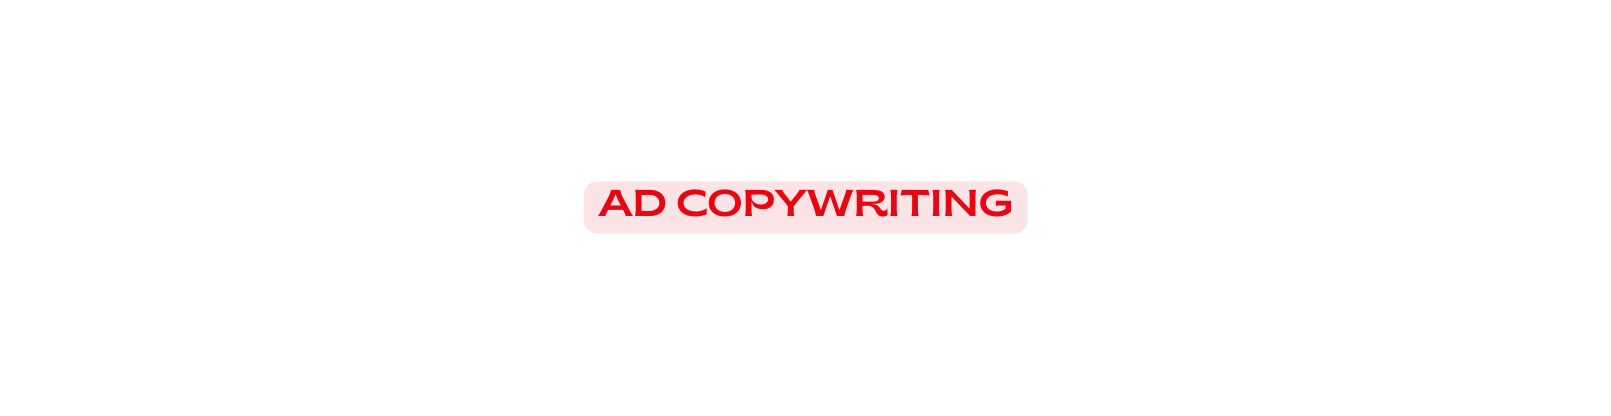 ad copywriting